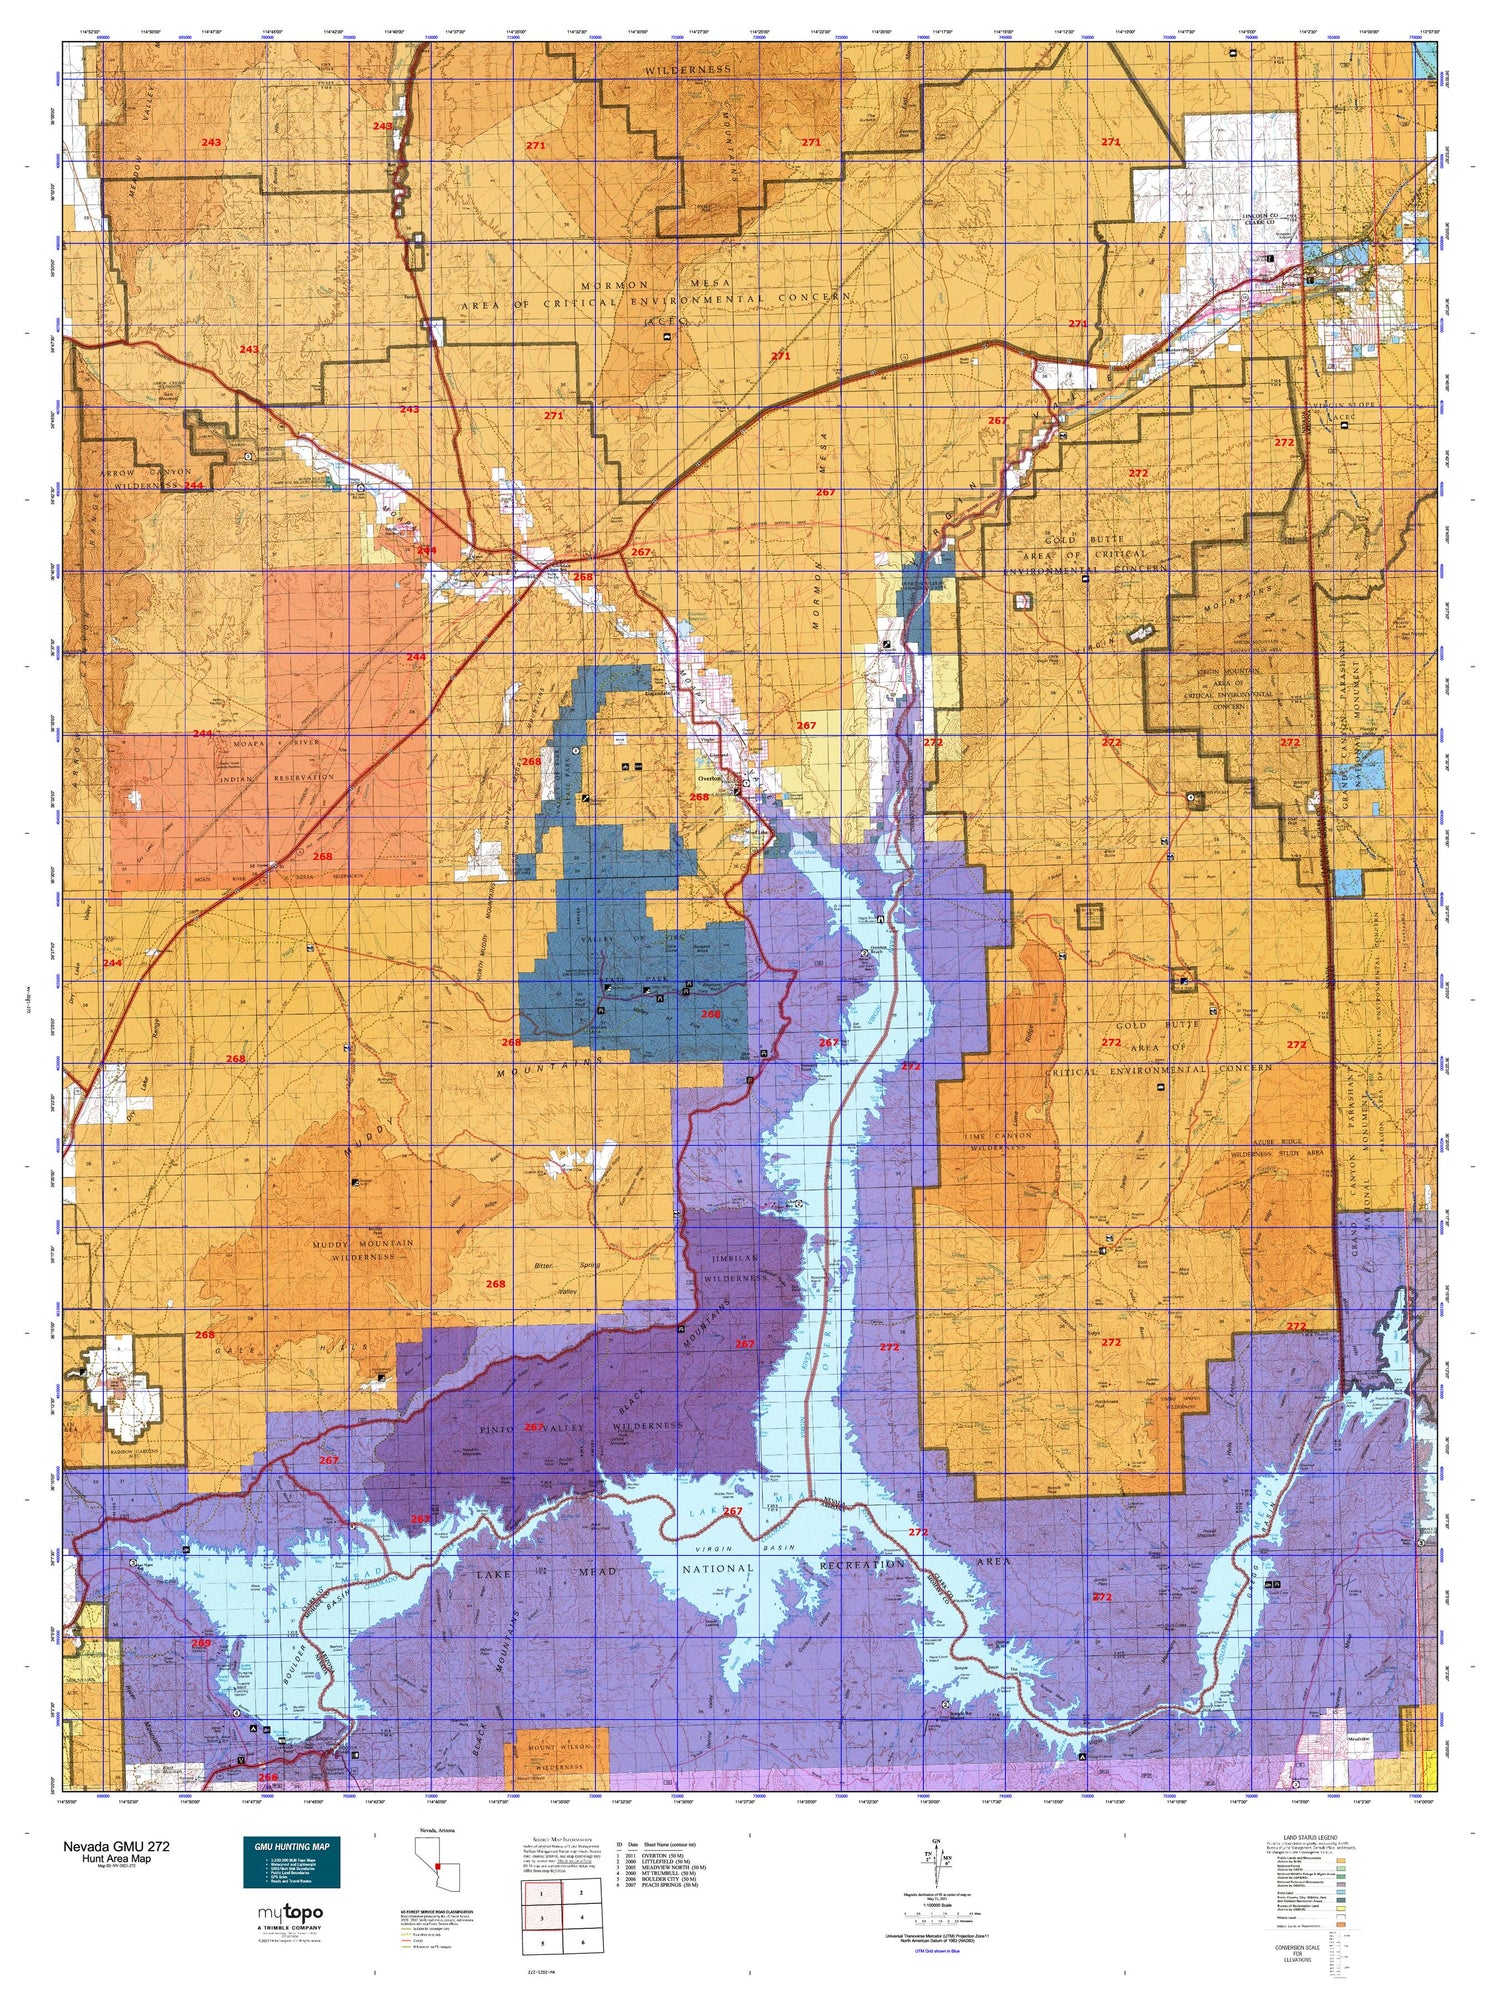 Nevada GMU 272 Map Image